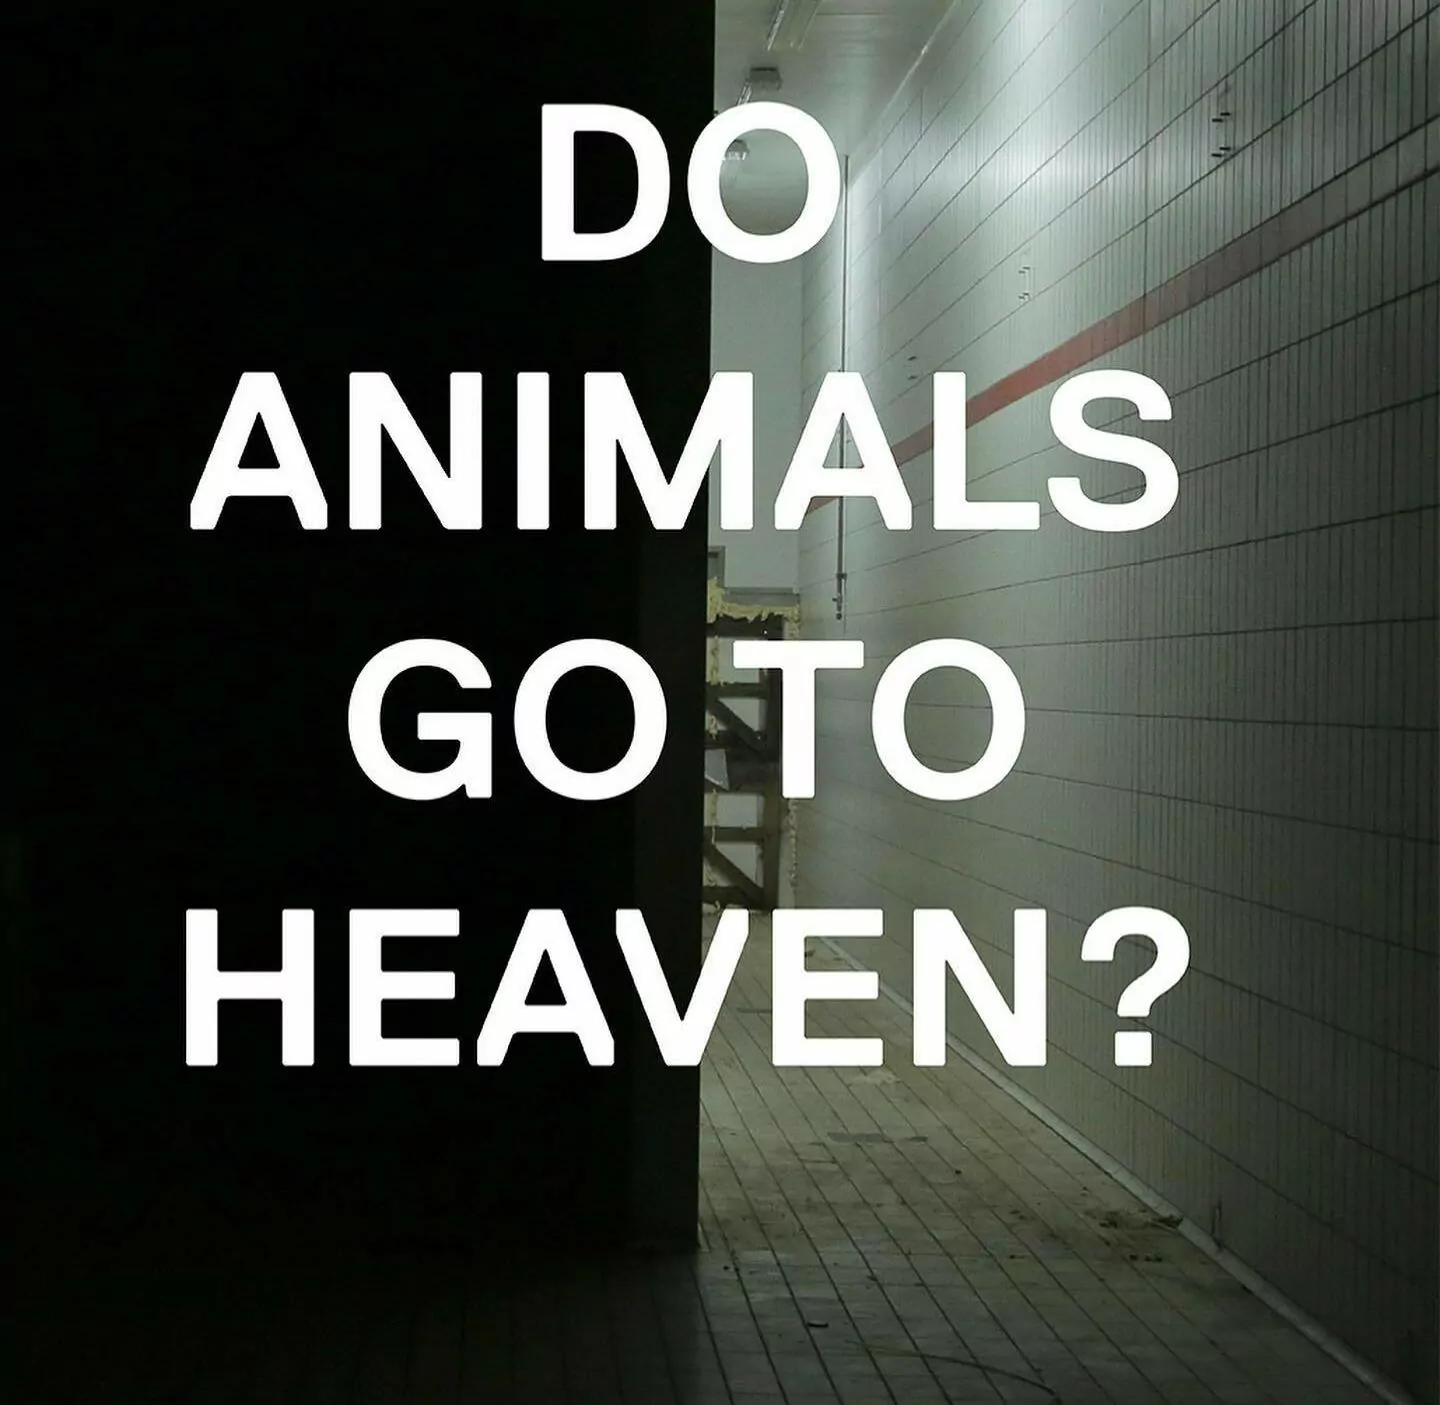 Do animals